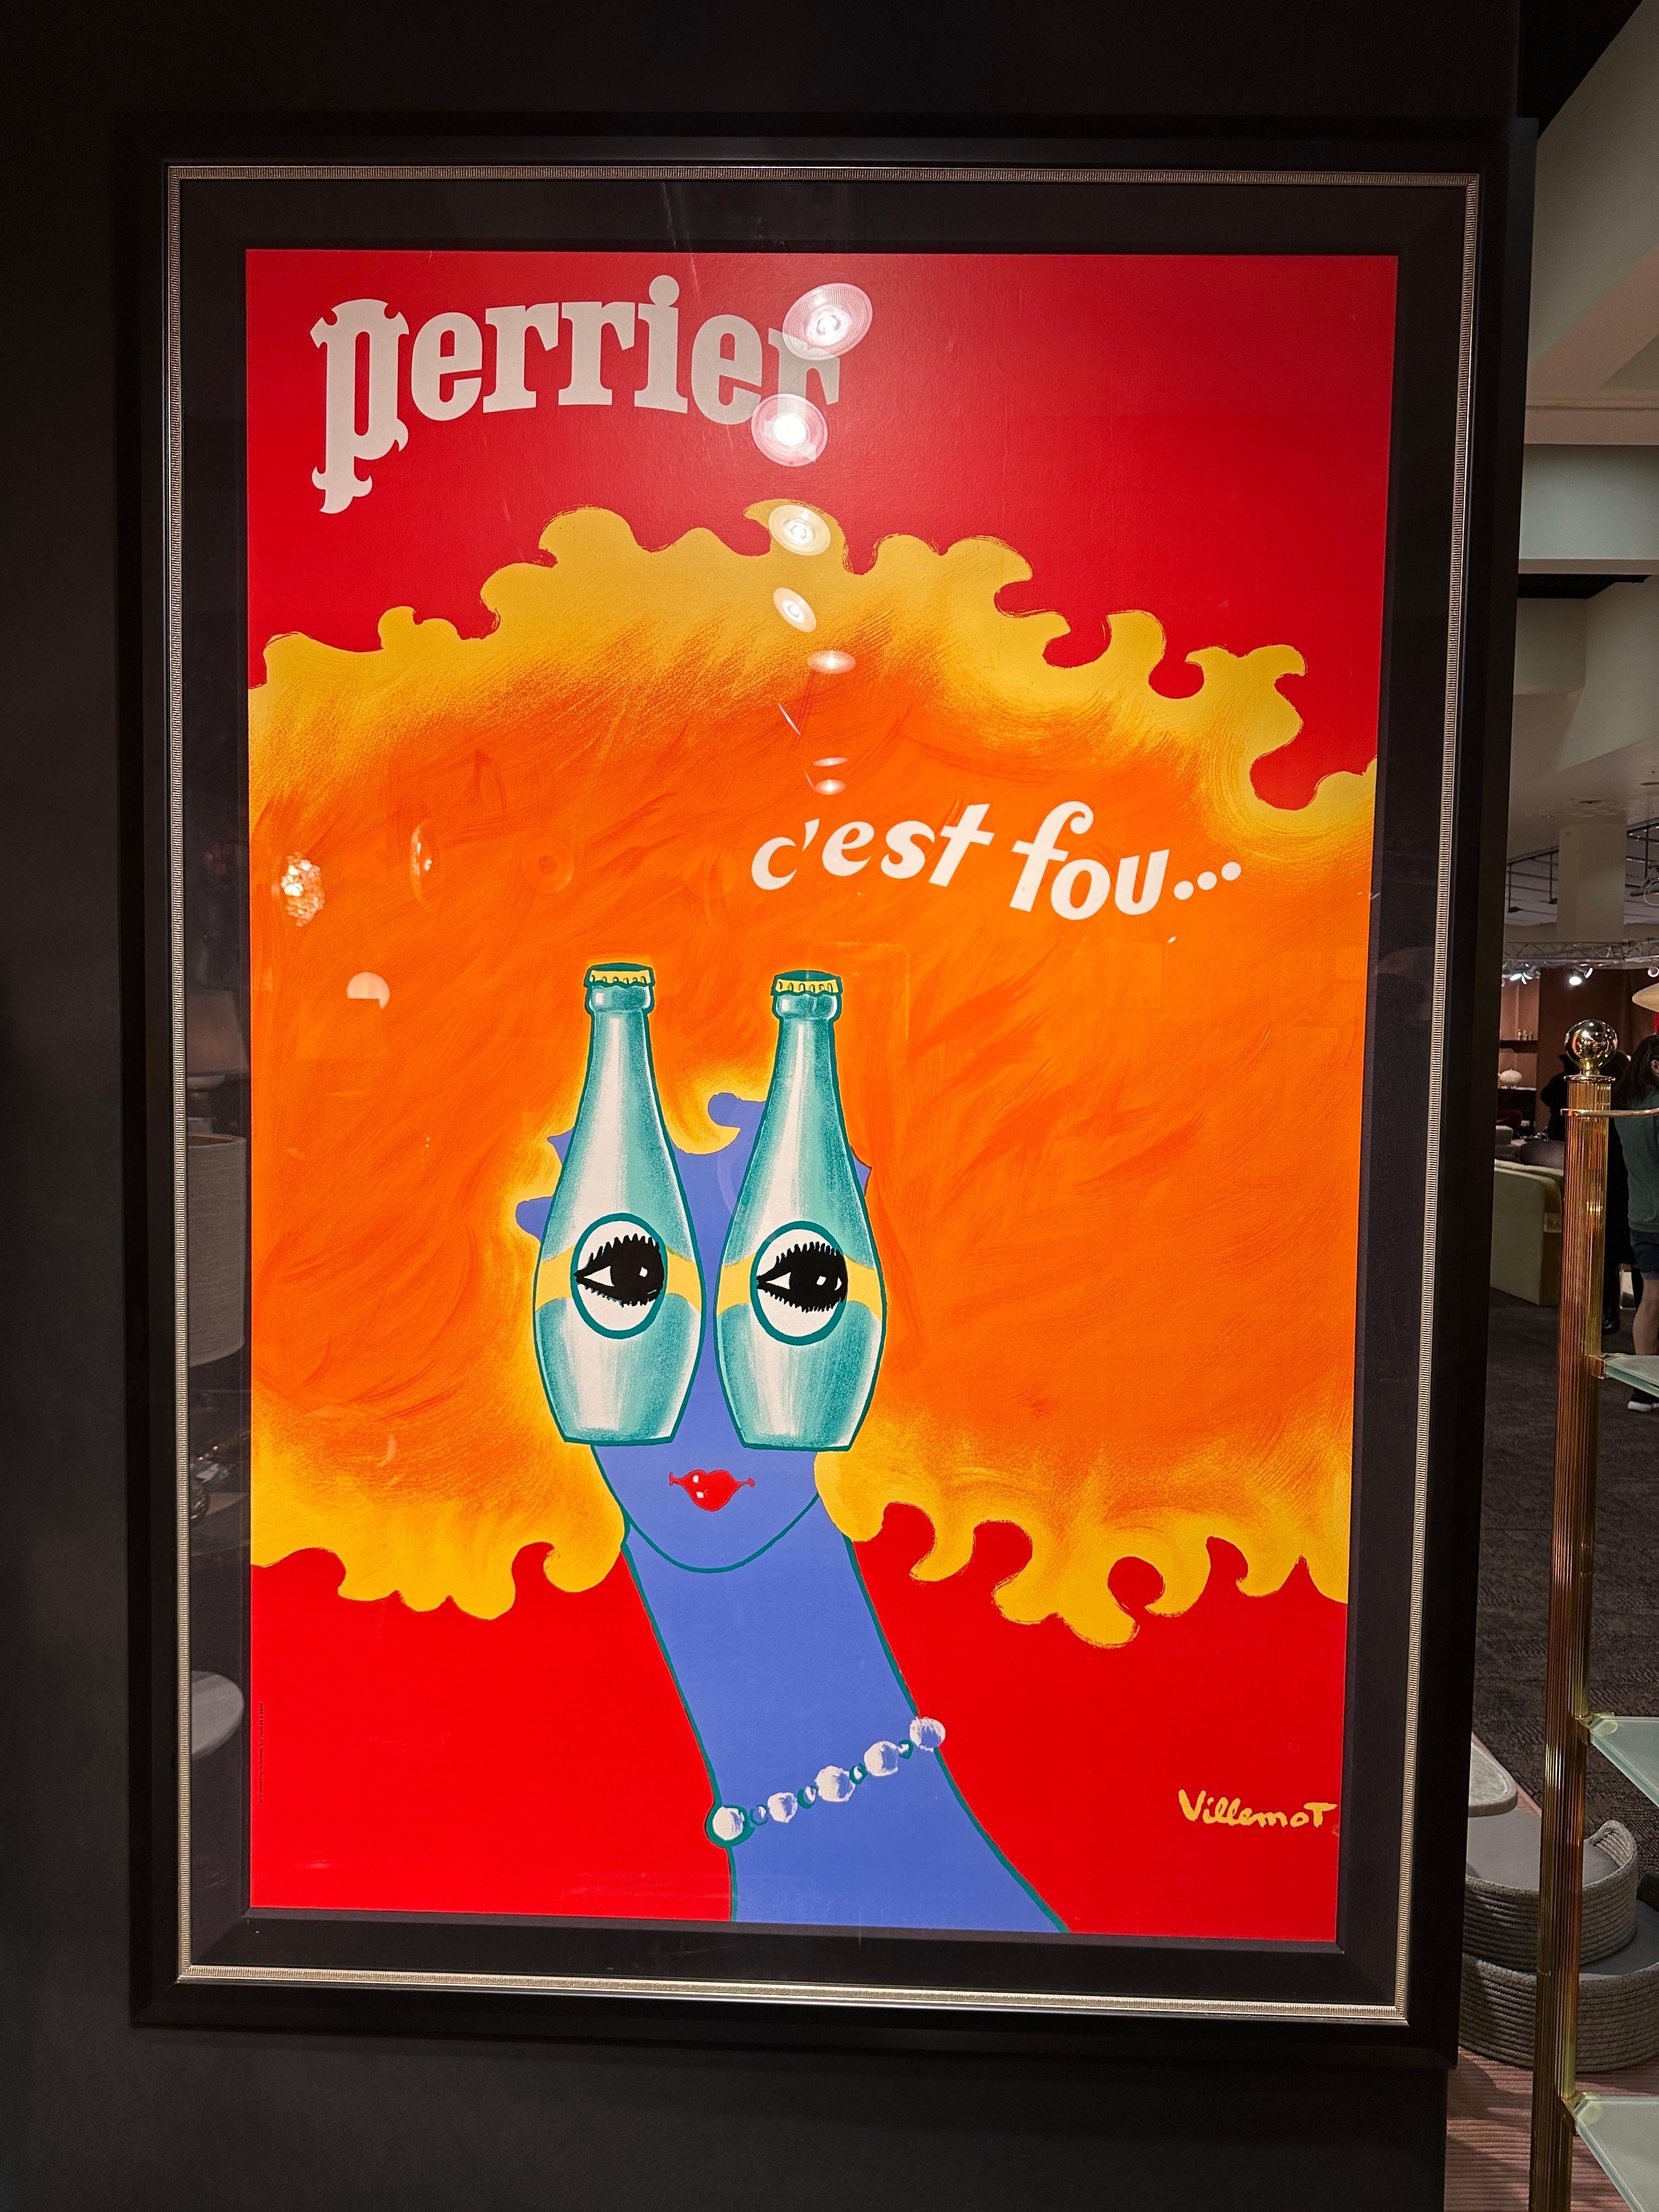 Rare framed “Perrier” poster by French artist Bernard Villemot. Poster is linen backed and framed under protective acrylic sheet. Frame is matt black with silver trim.